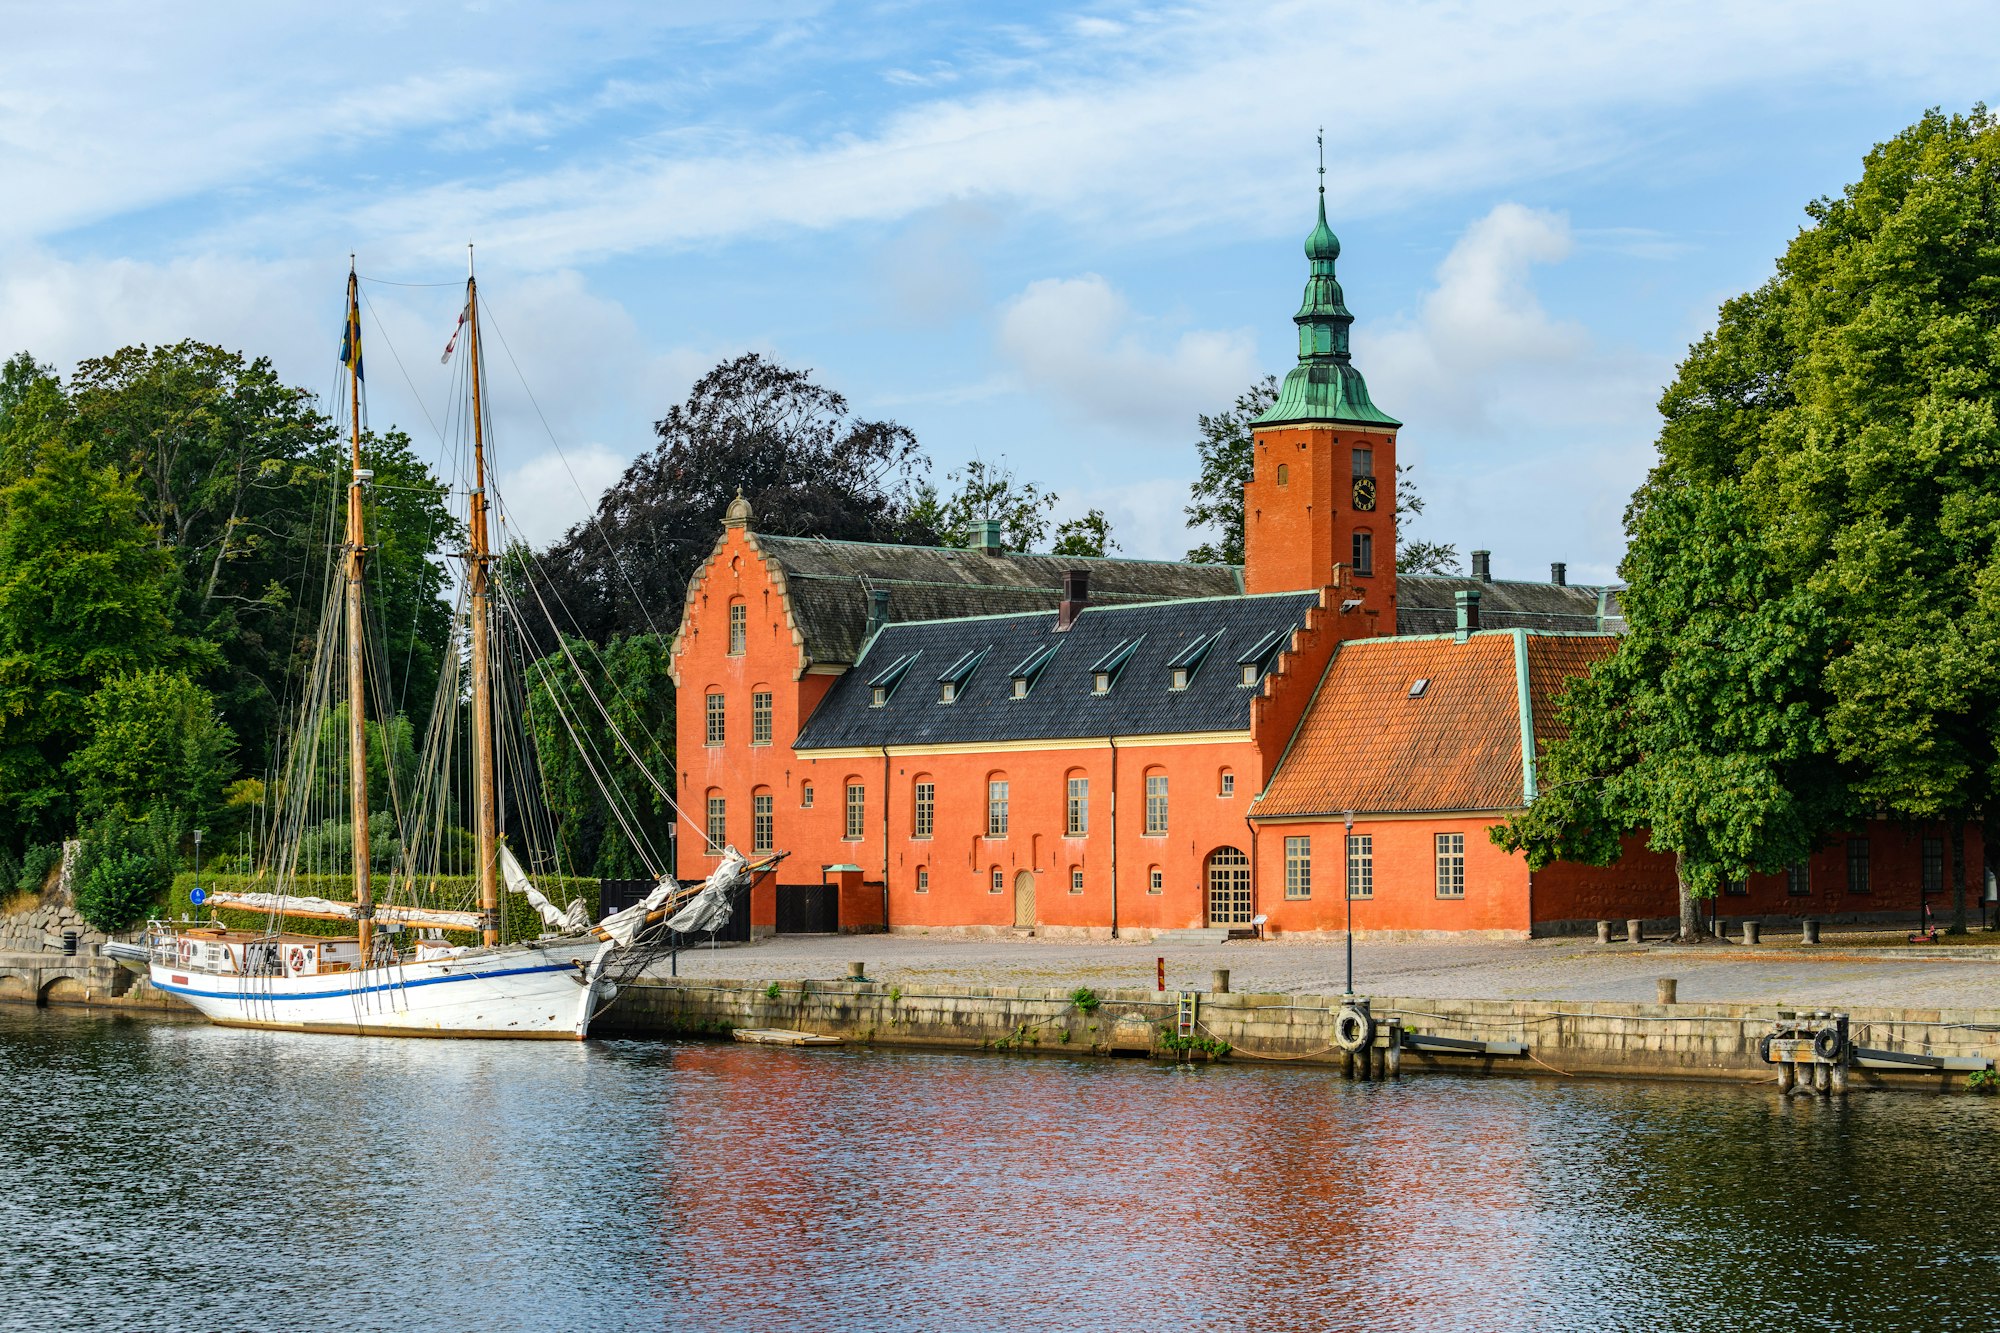 Halmstad Castle (Halmstads slott) is a 17th-century building